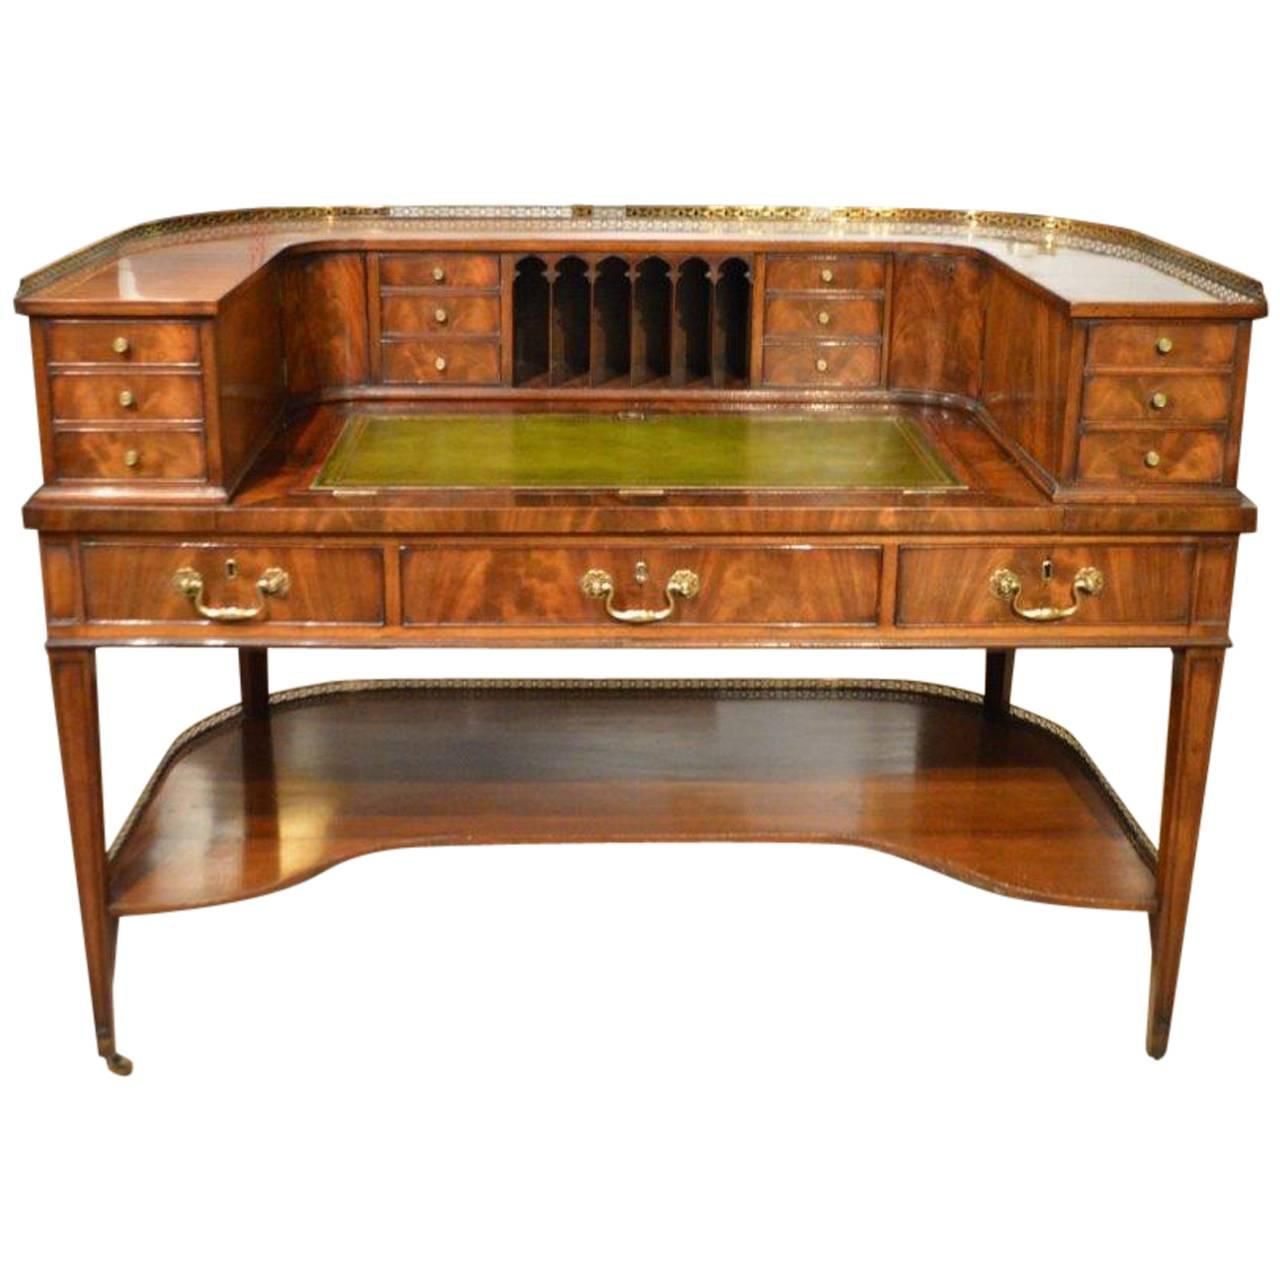 Fine Quality George III Style Flamed Mahogany Carlton House Desk